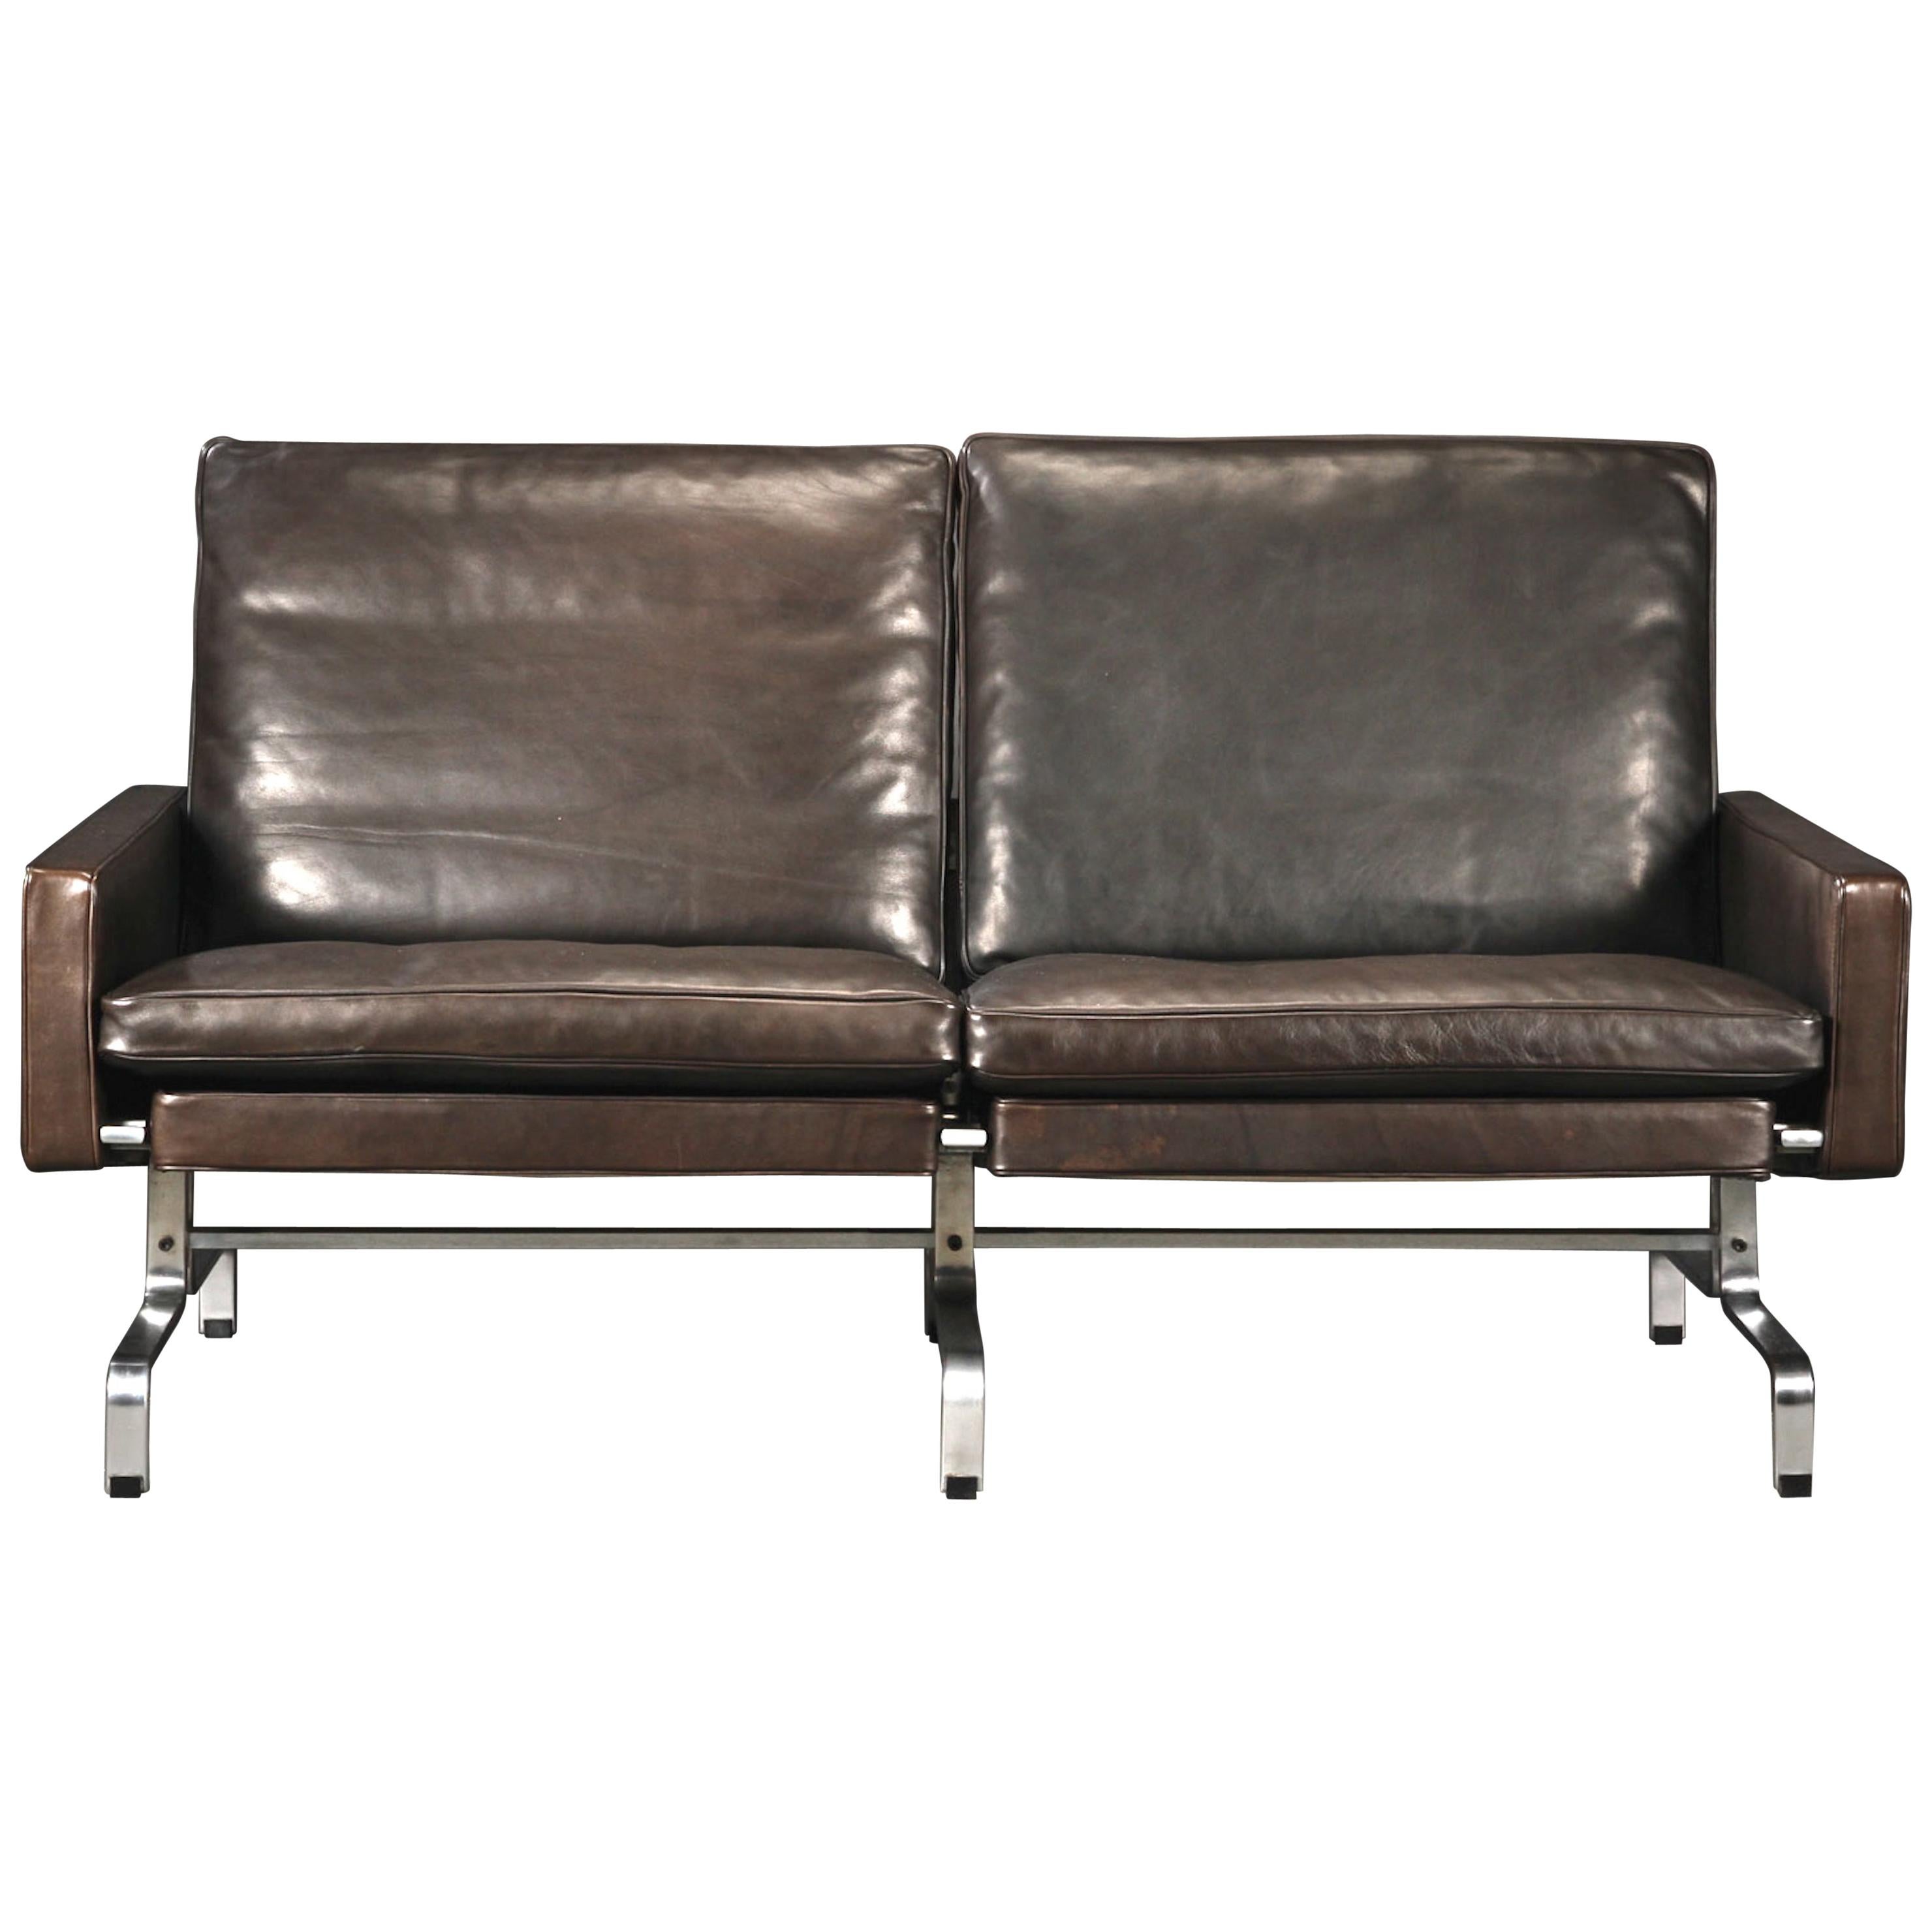 Poul Kjaerholm Two-Seat Black "Elegance" Leather Sofa for E.Kold Christensen For Sale